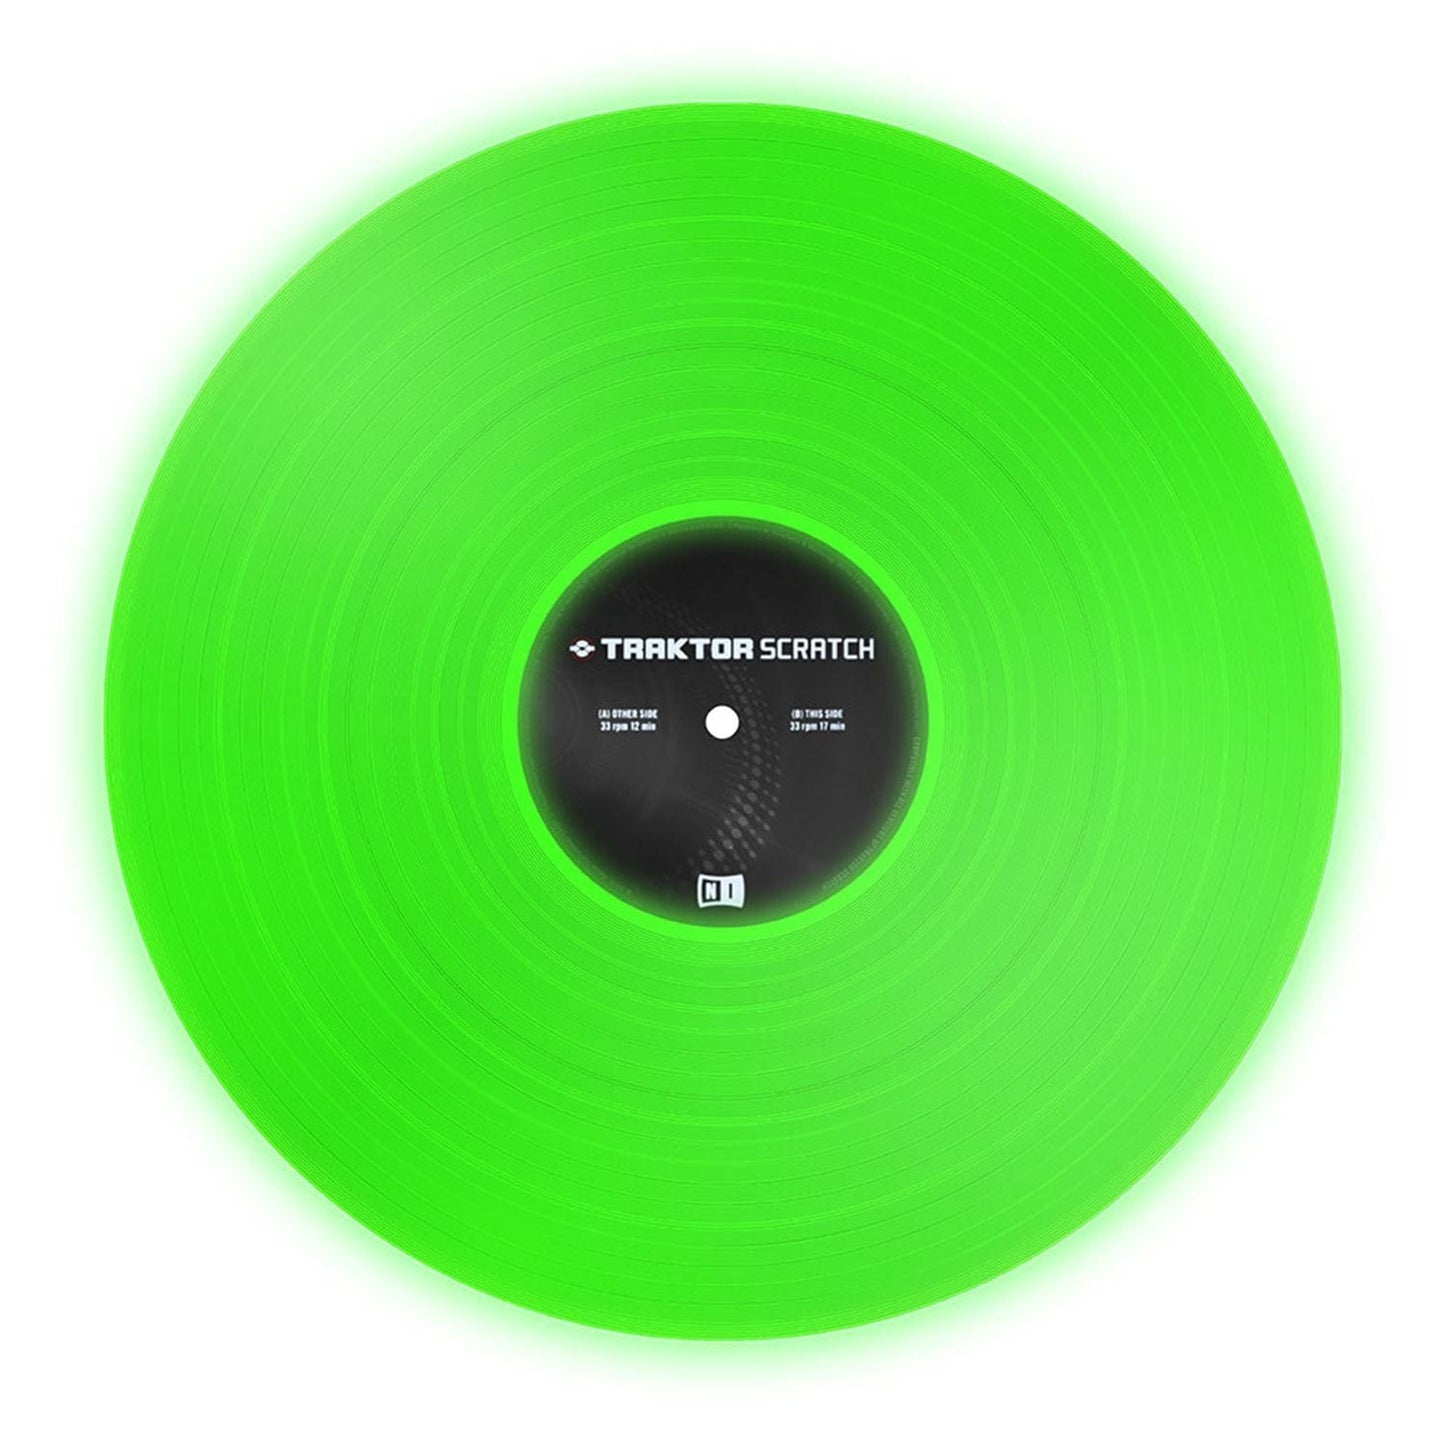 NI Traktor Scratch Vinyl - Fluorescent Green - ProSound and Stage Lighting